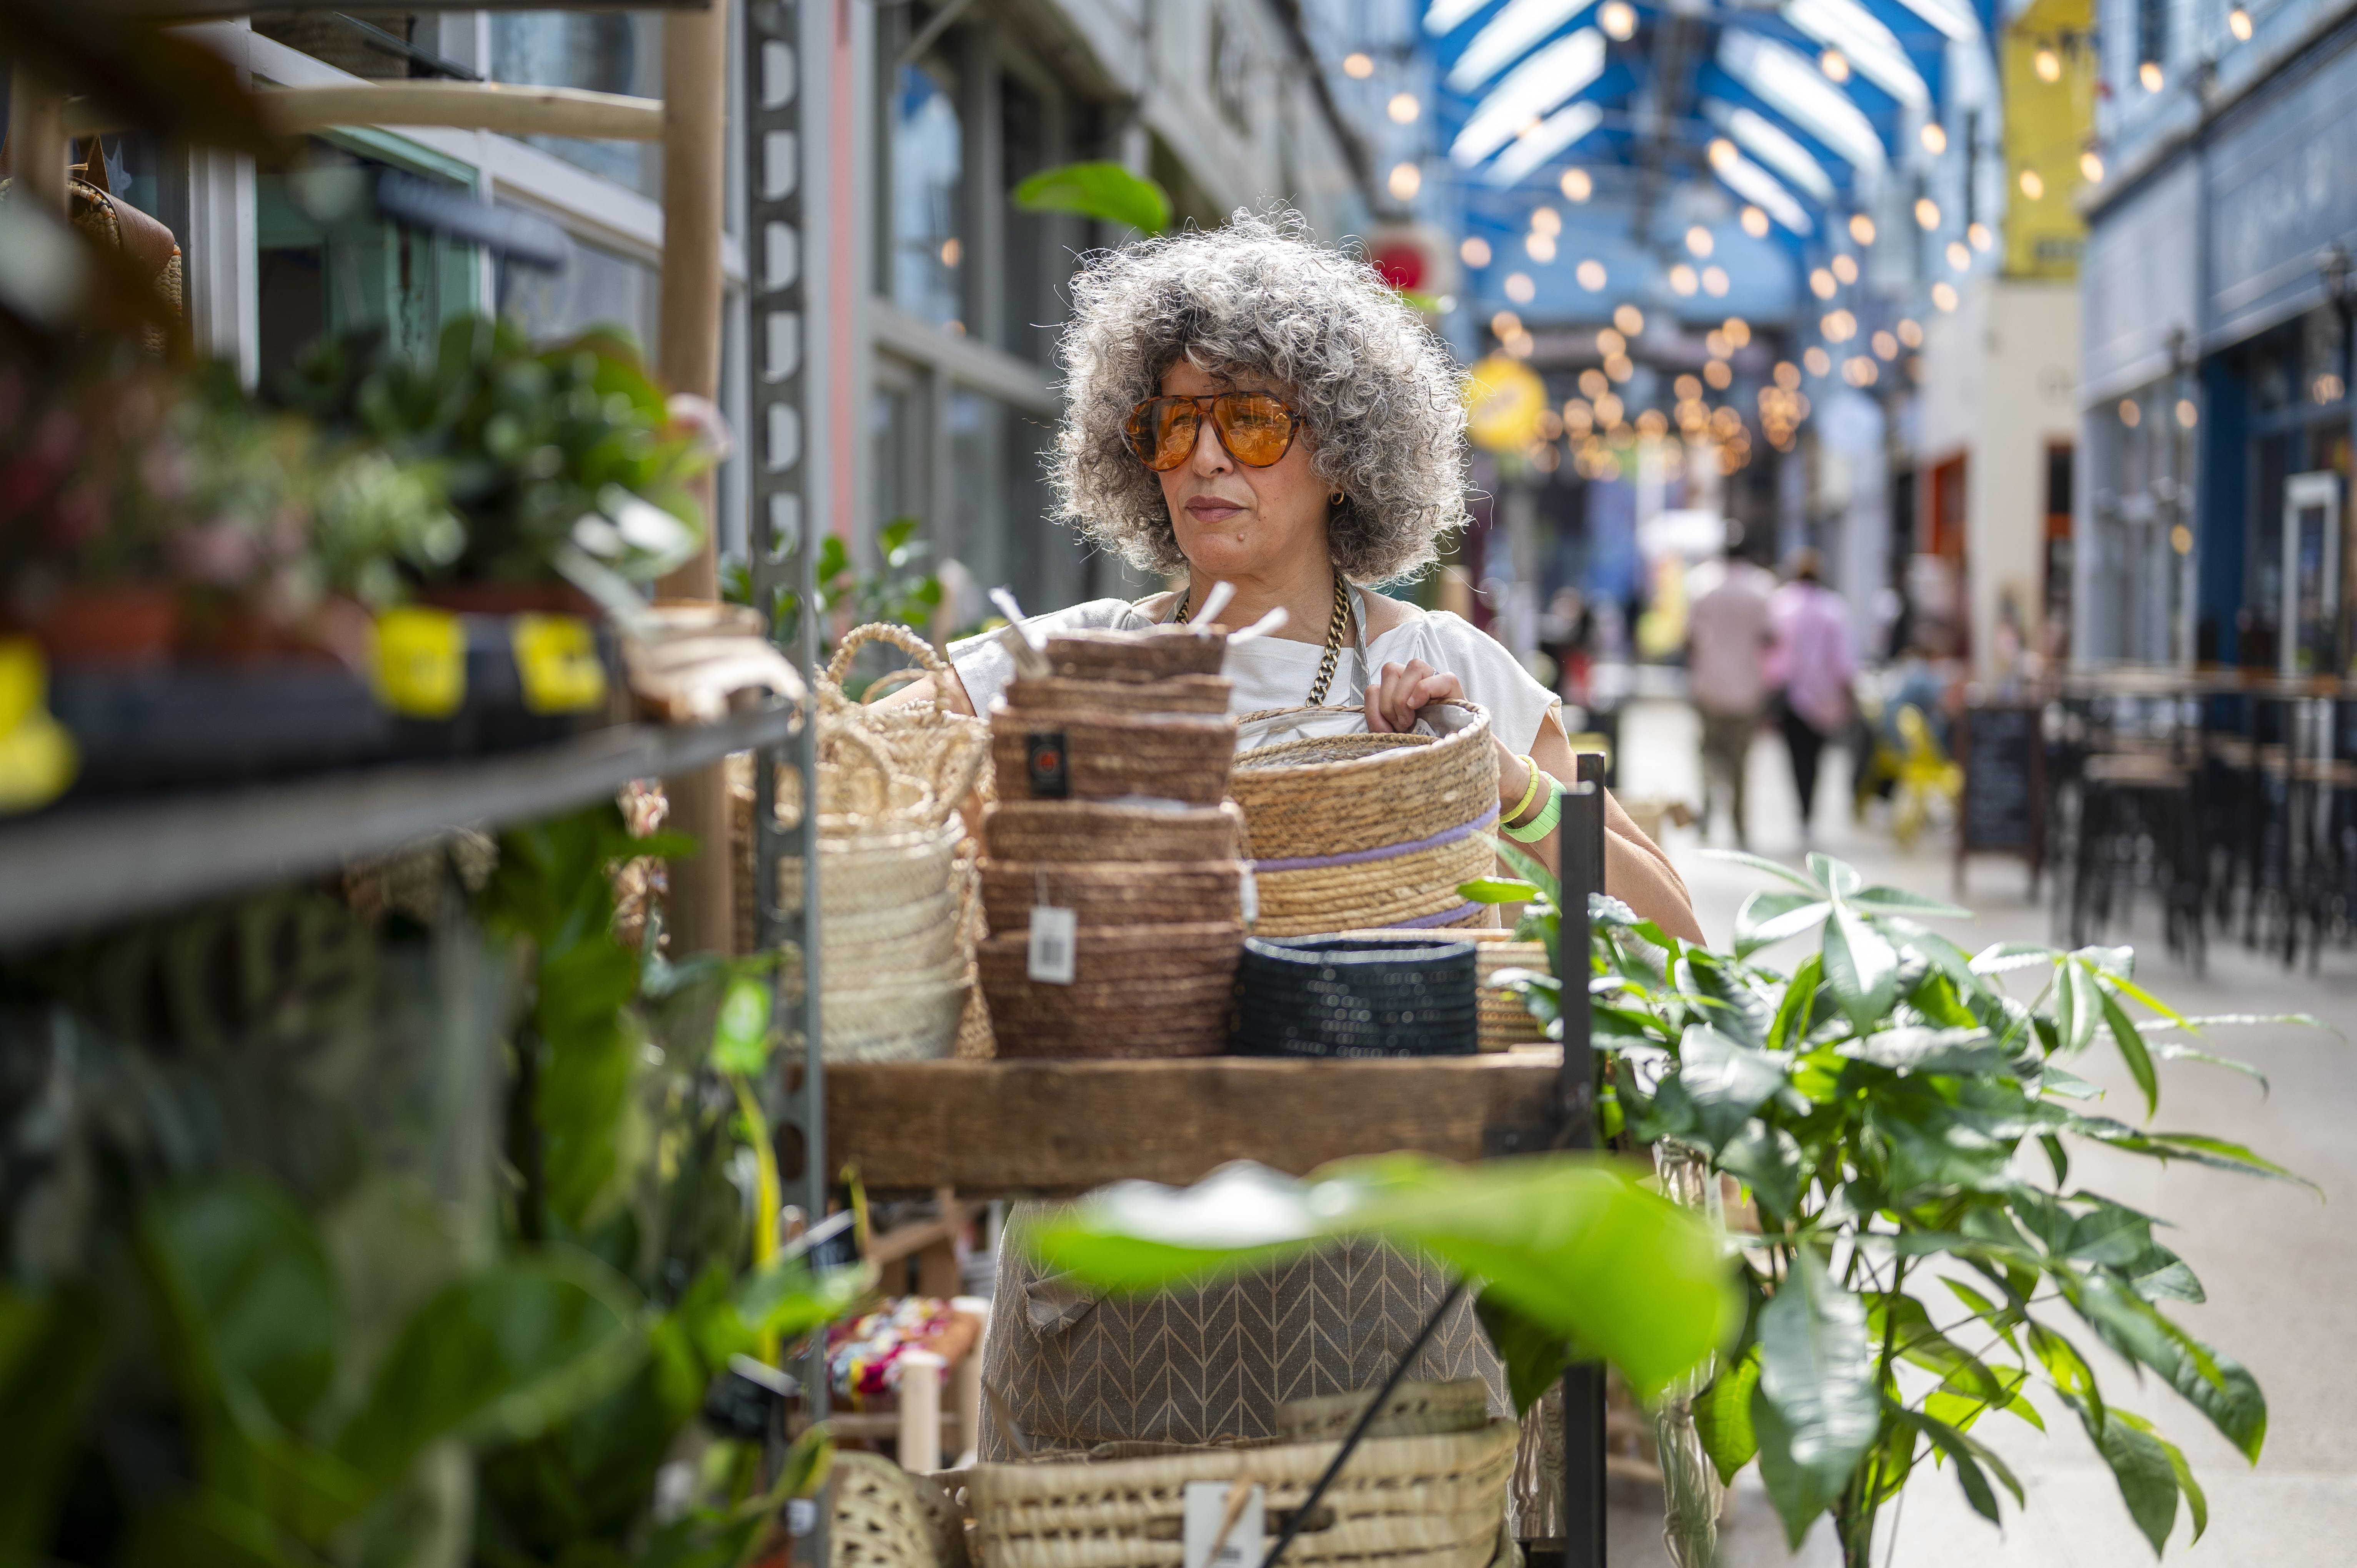 Woman browing baskets outside London shop